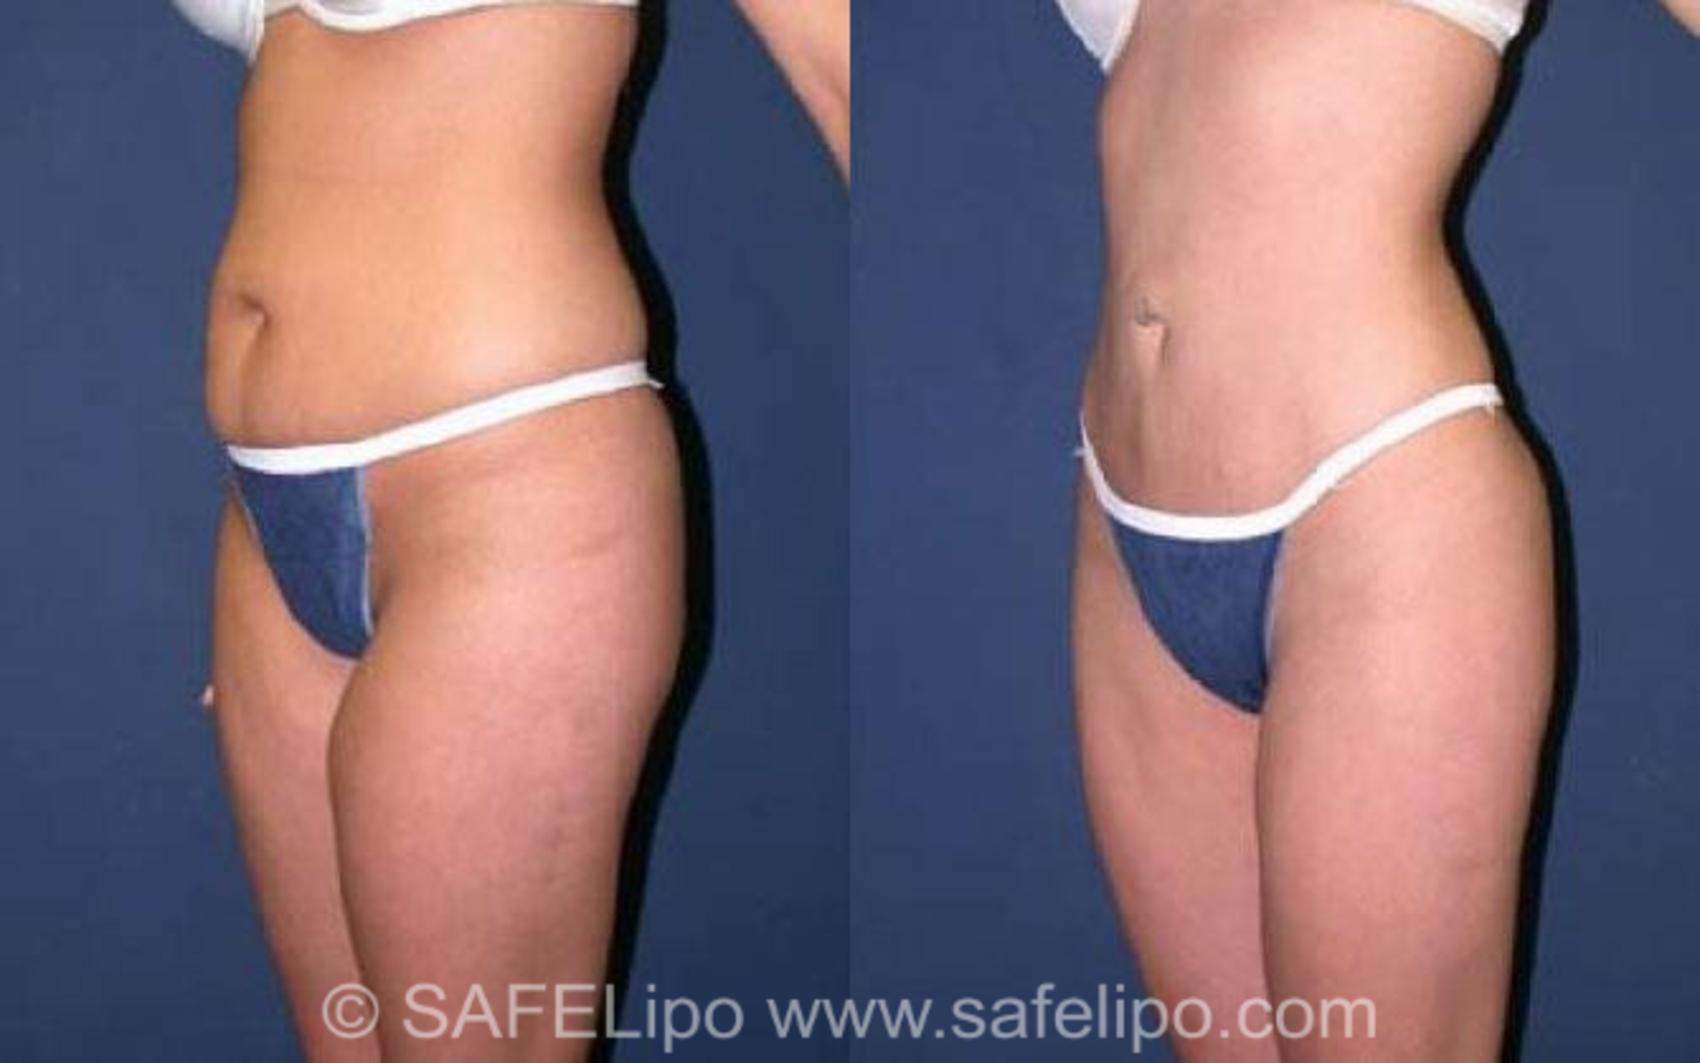 SAFELipoHD® Case 76 Before & After View #2 | SAFELipo®